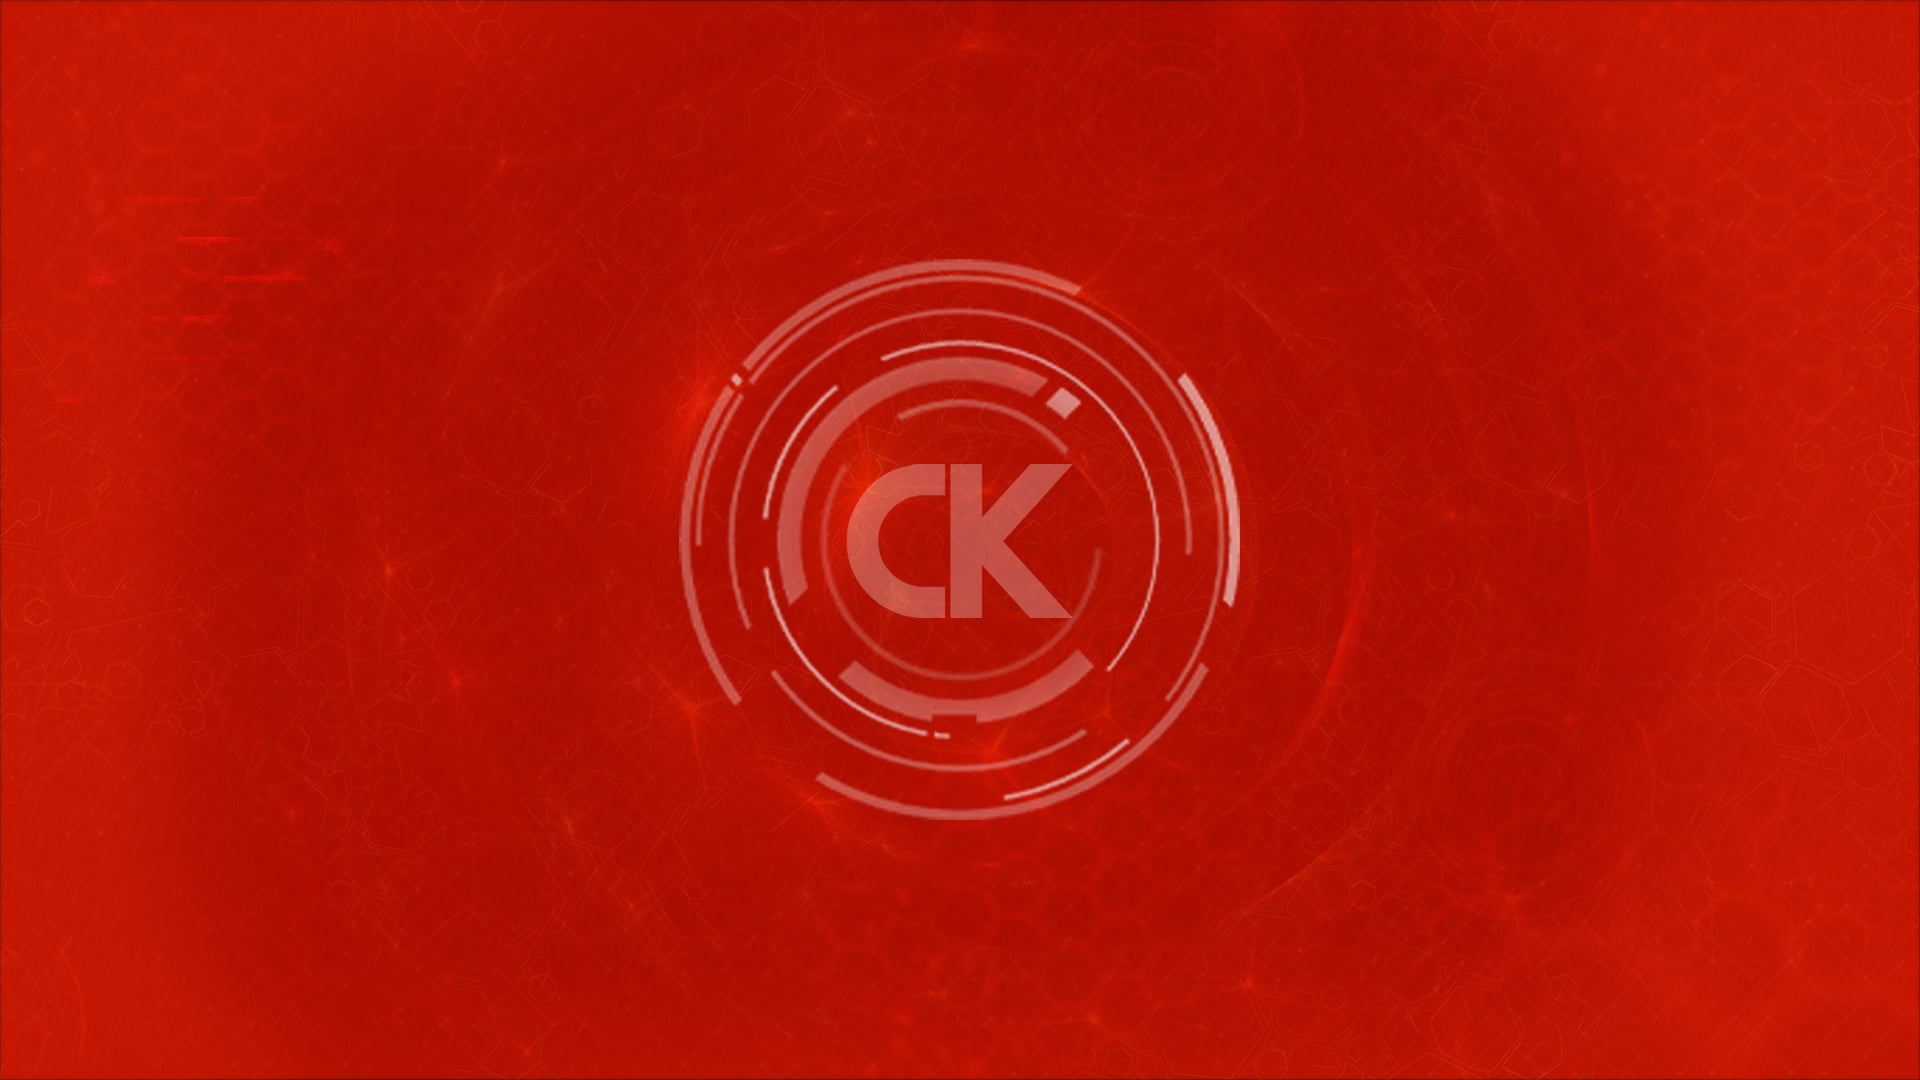 CK logo, digital art, red background